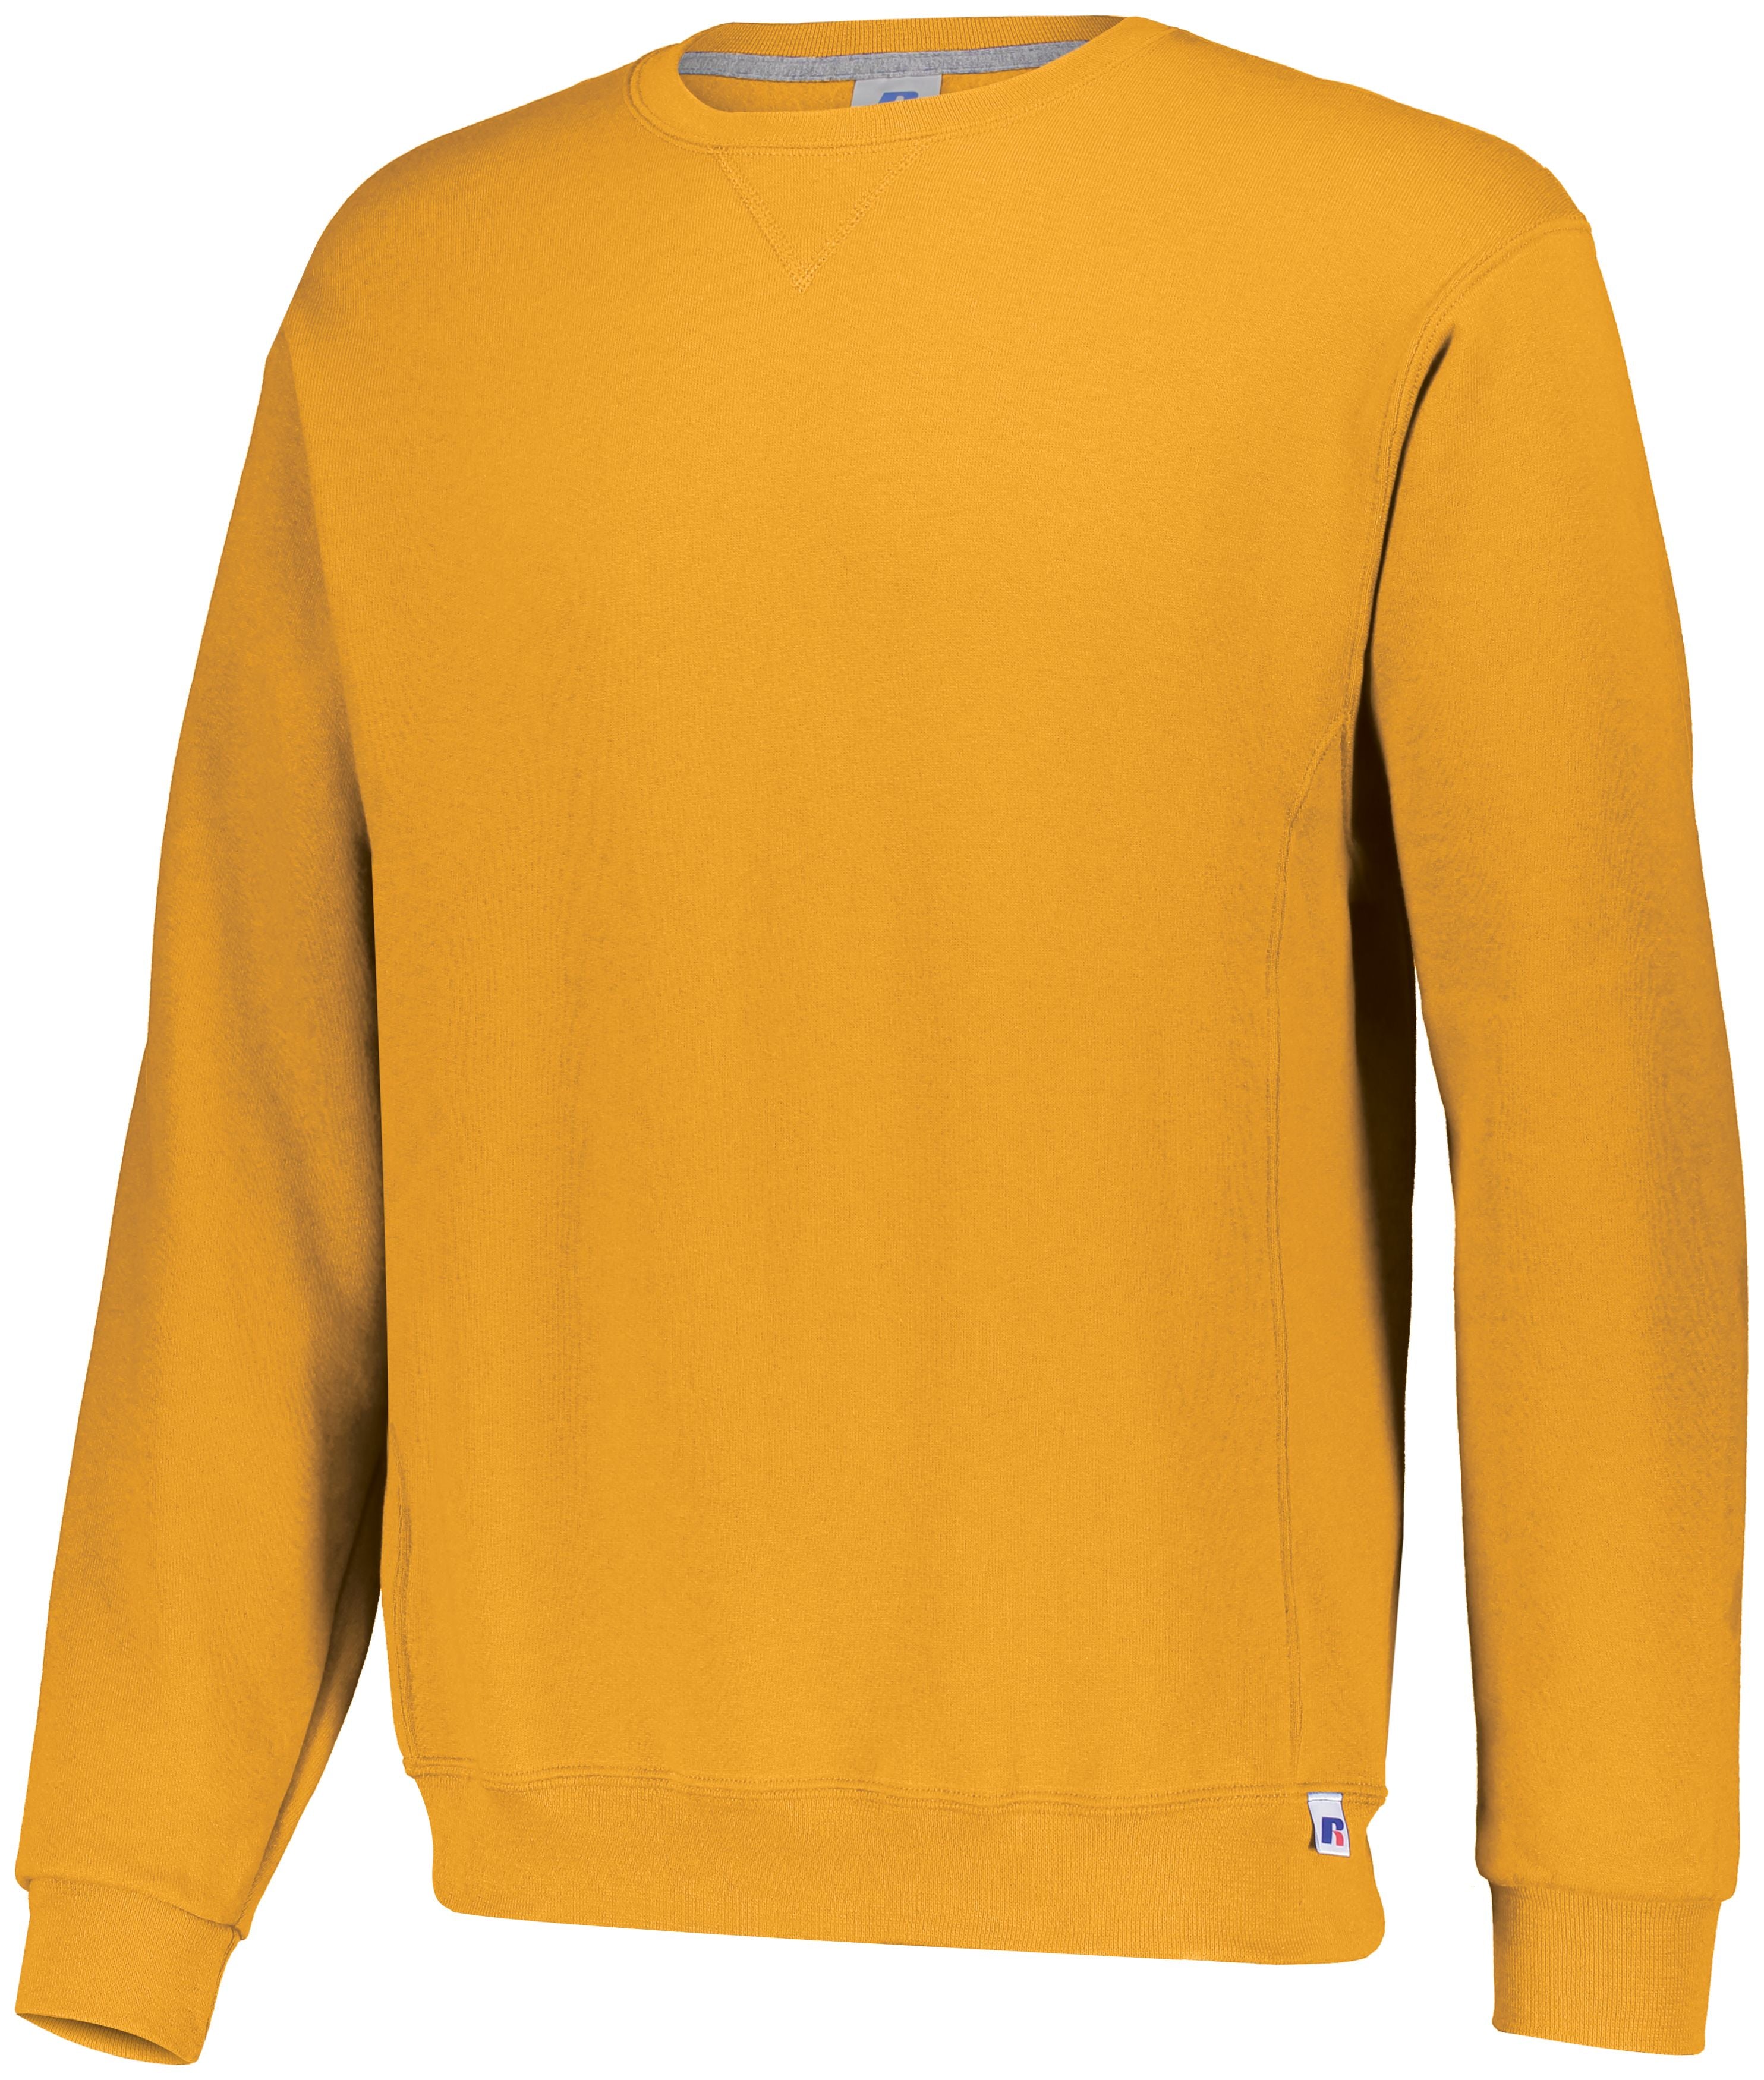 Russell Athletic Dri-Power  Fleece Crew Sweatshirt in Gold  -Part of the Adult, Adult-Sweatshirt, Russell-Athletic-Products, Outerwear product lines at KanaleyCreations.com